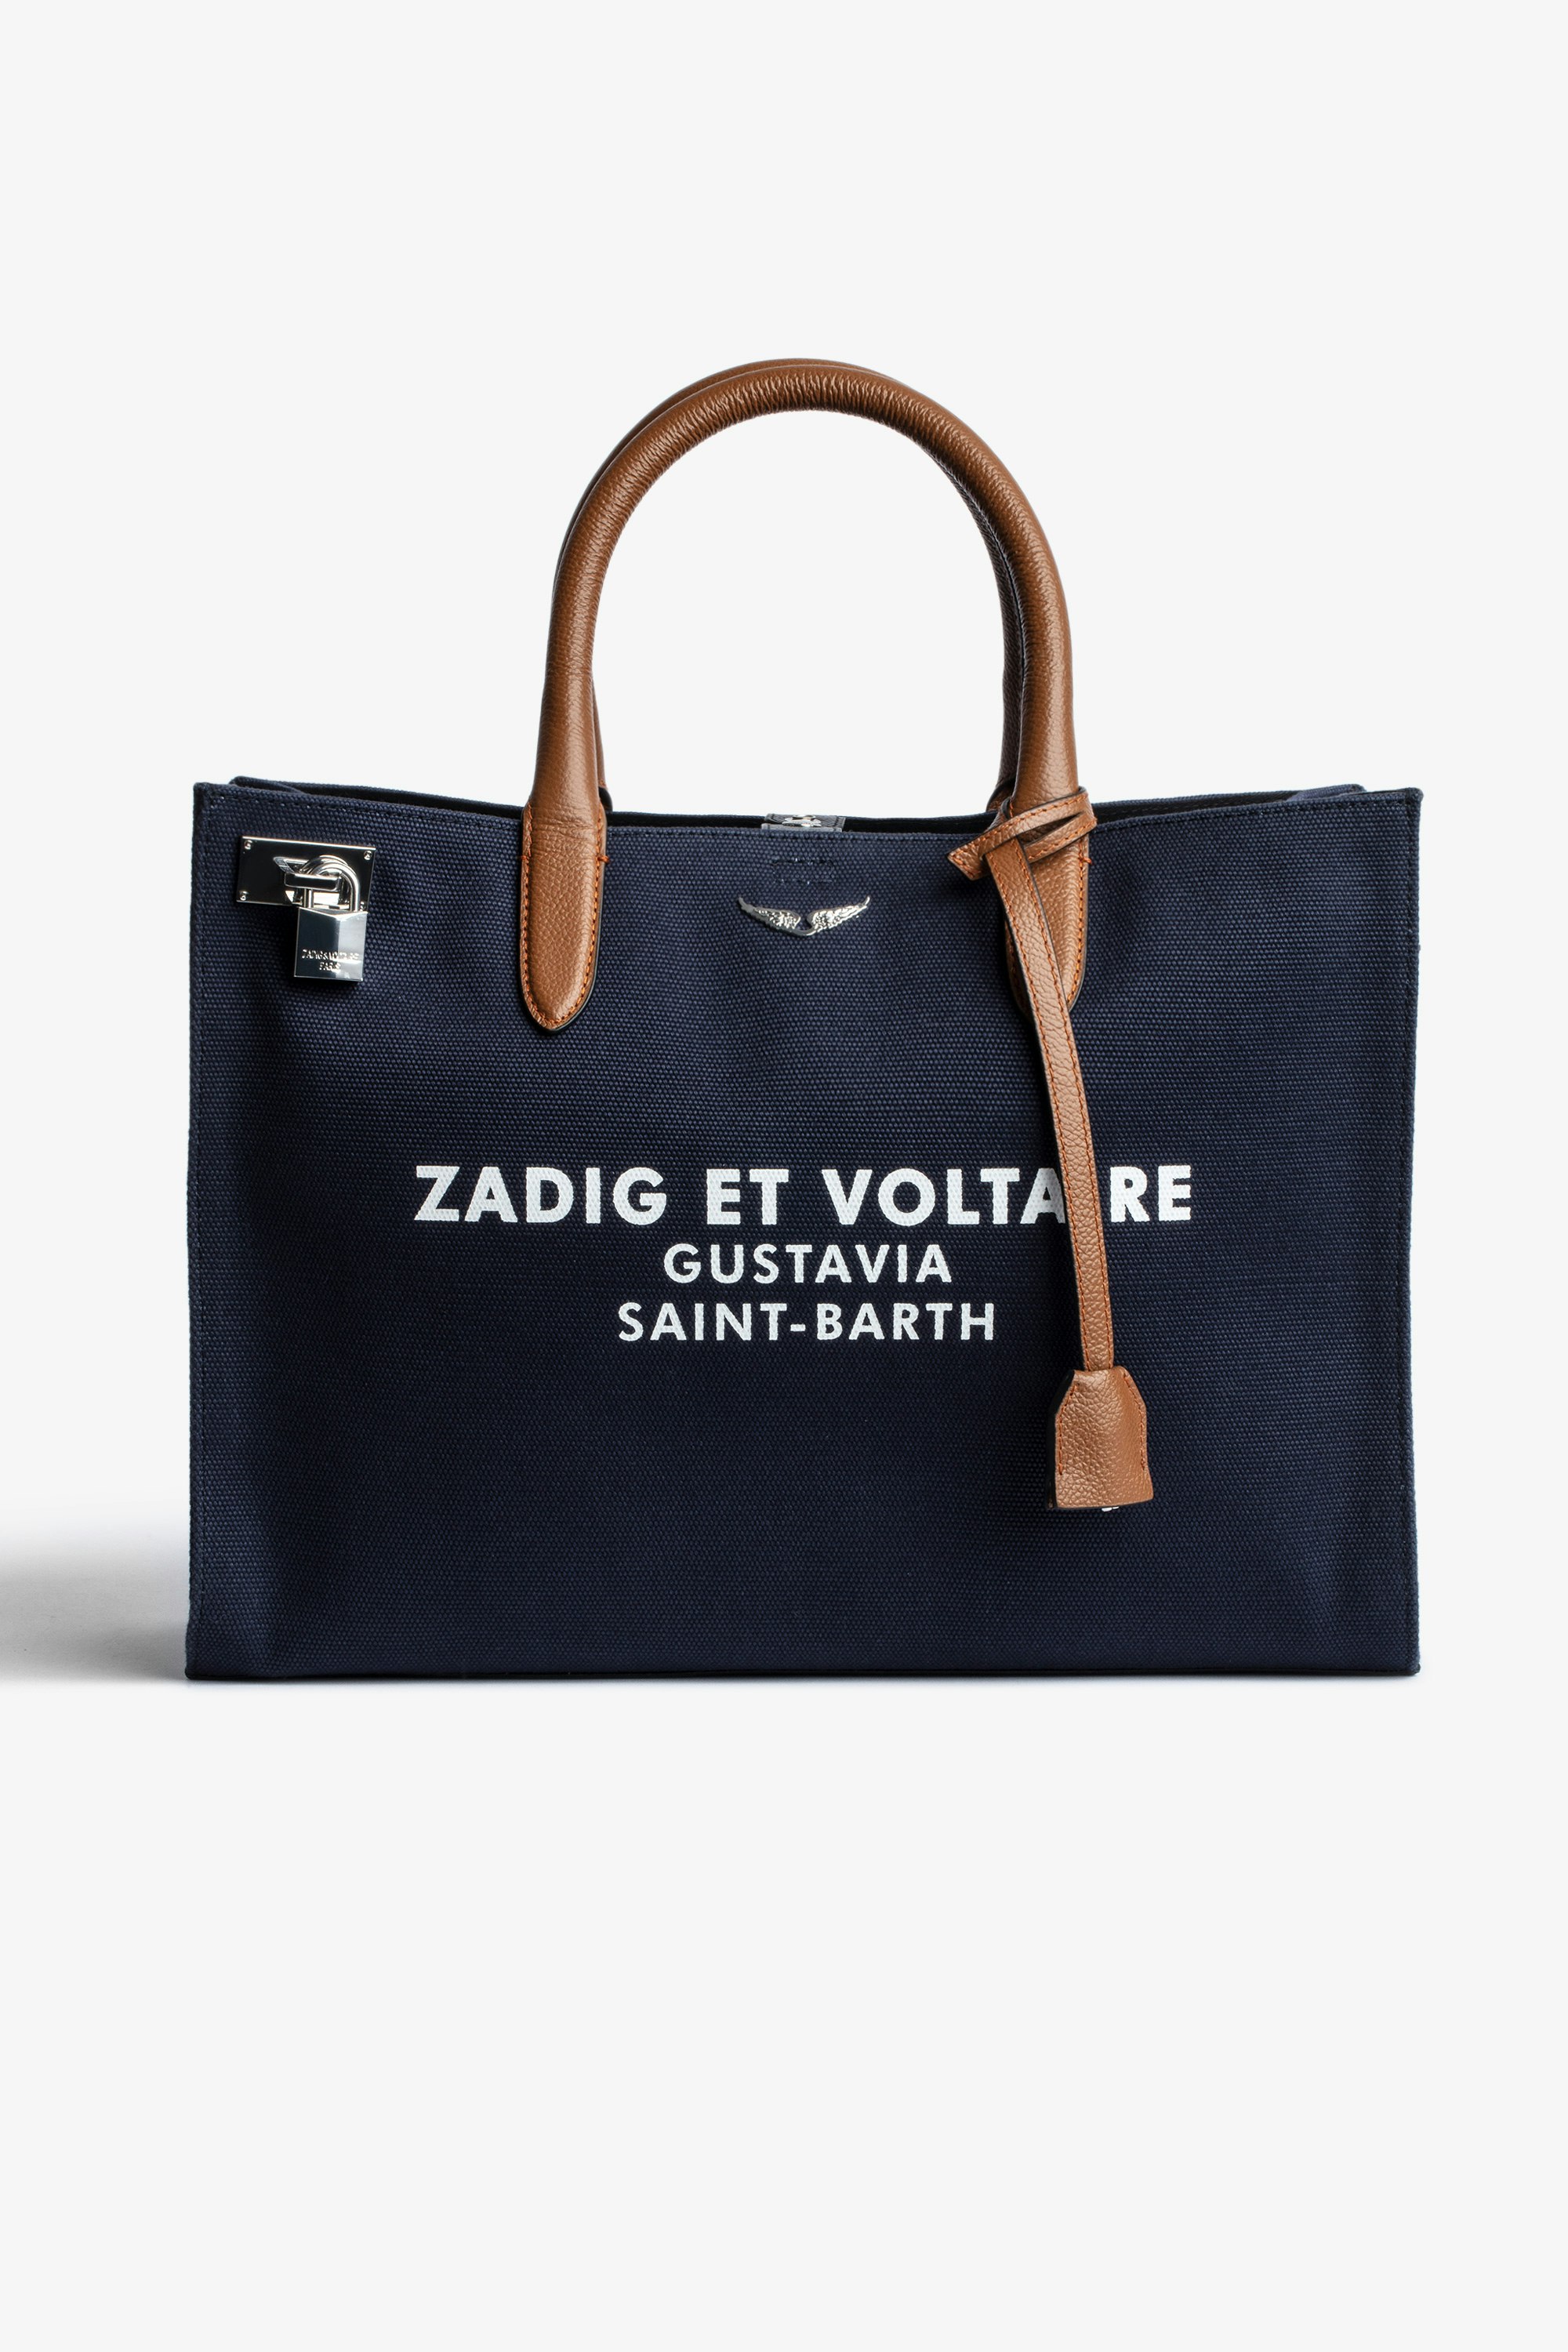 Sac Candide Large Saint Barth Sac Candide Large en toile bleu marine imprimé Saint Barth Femme